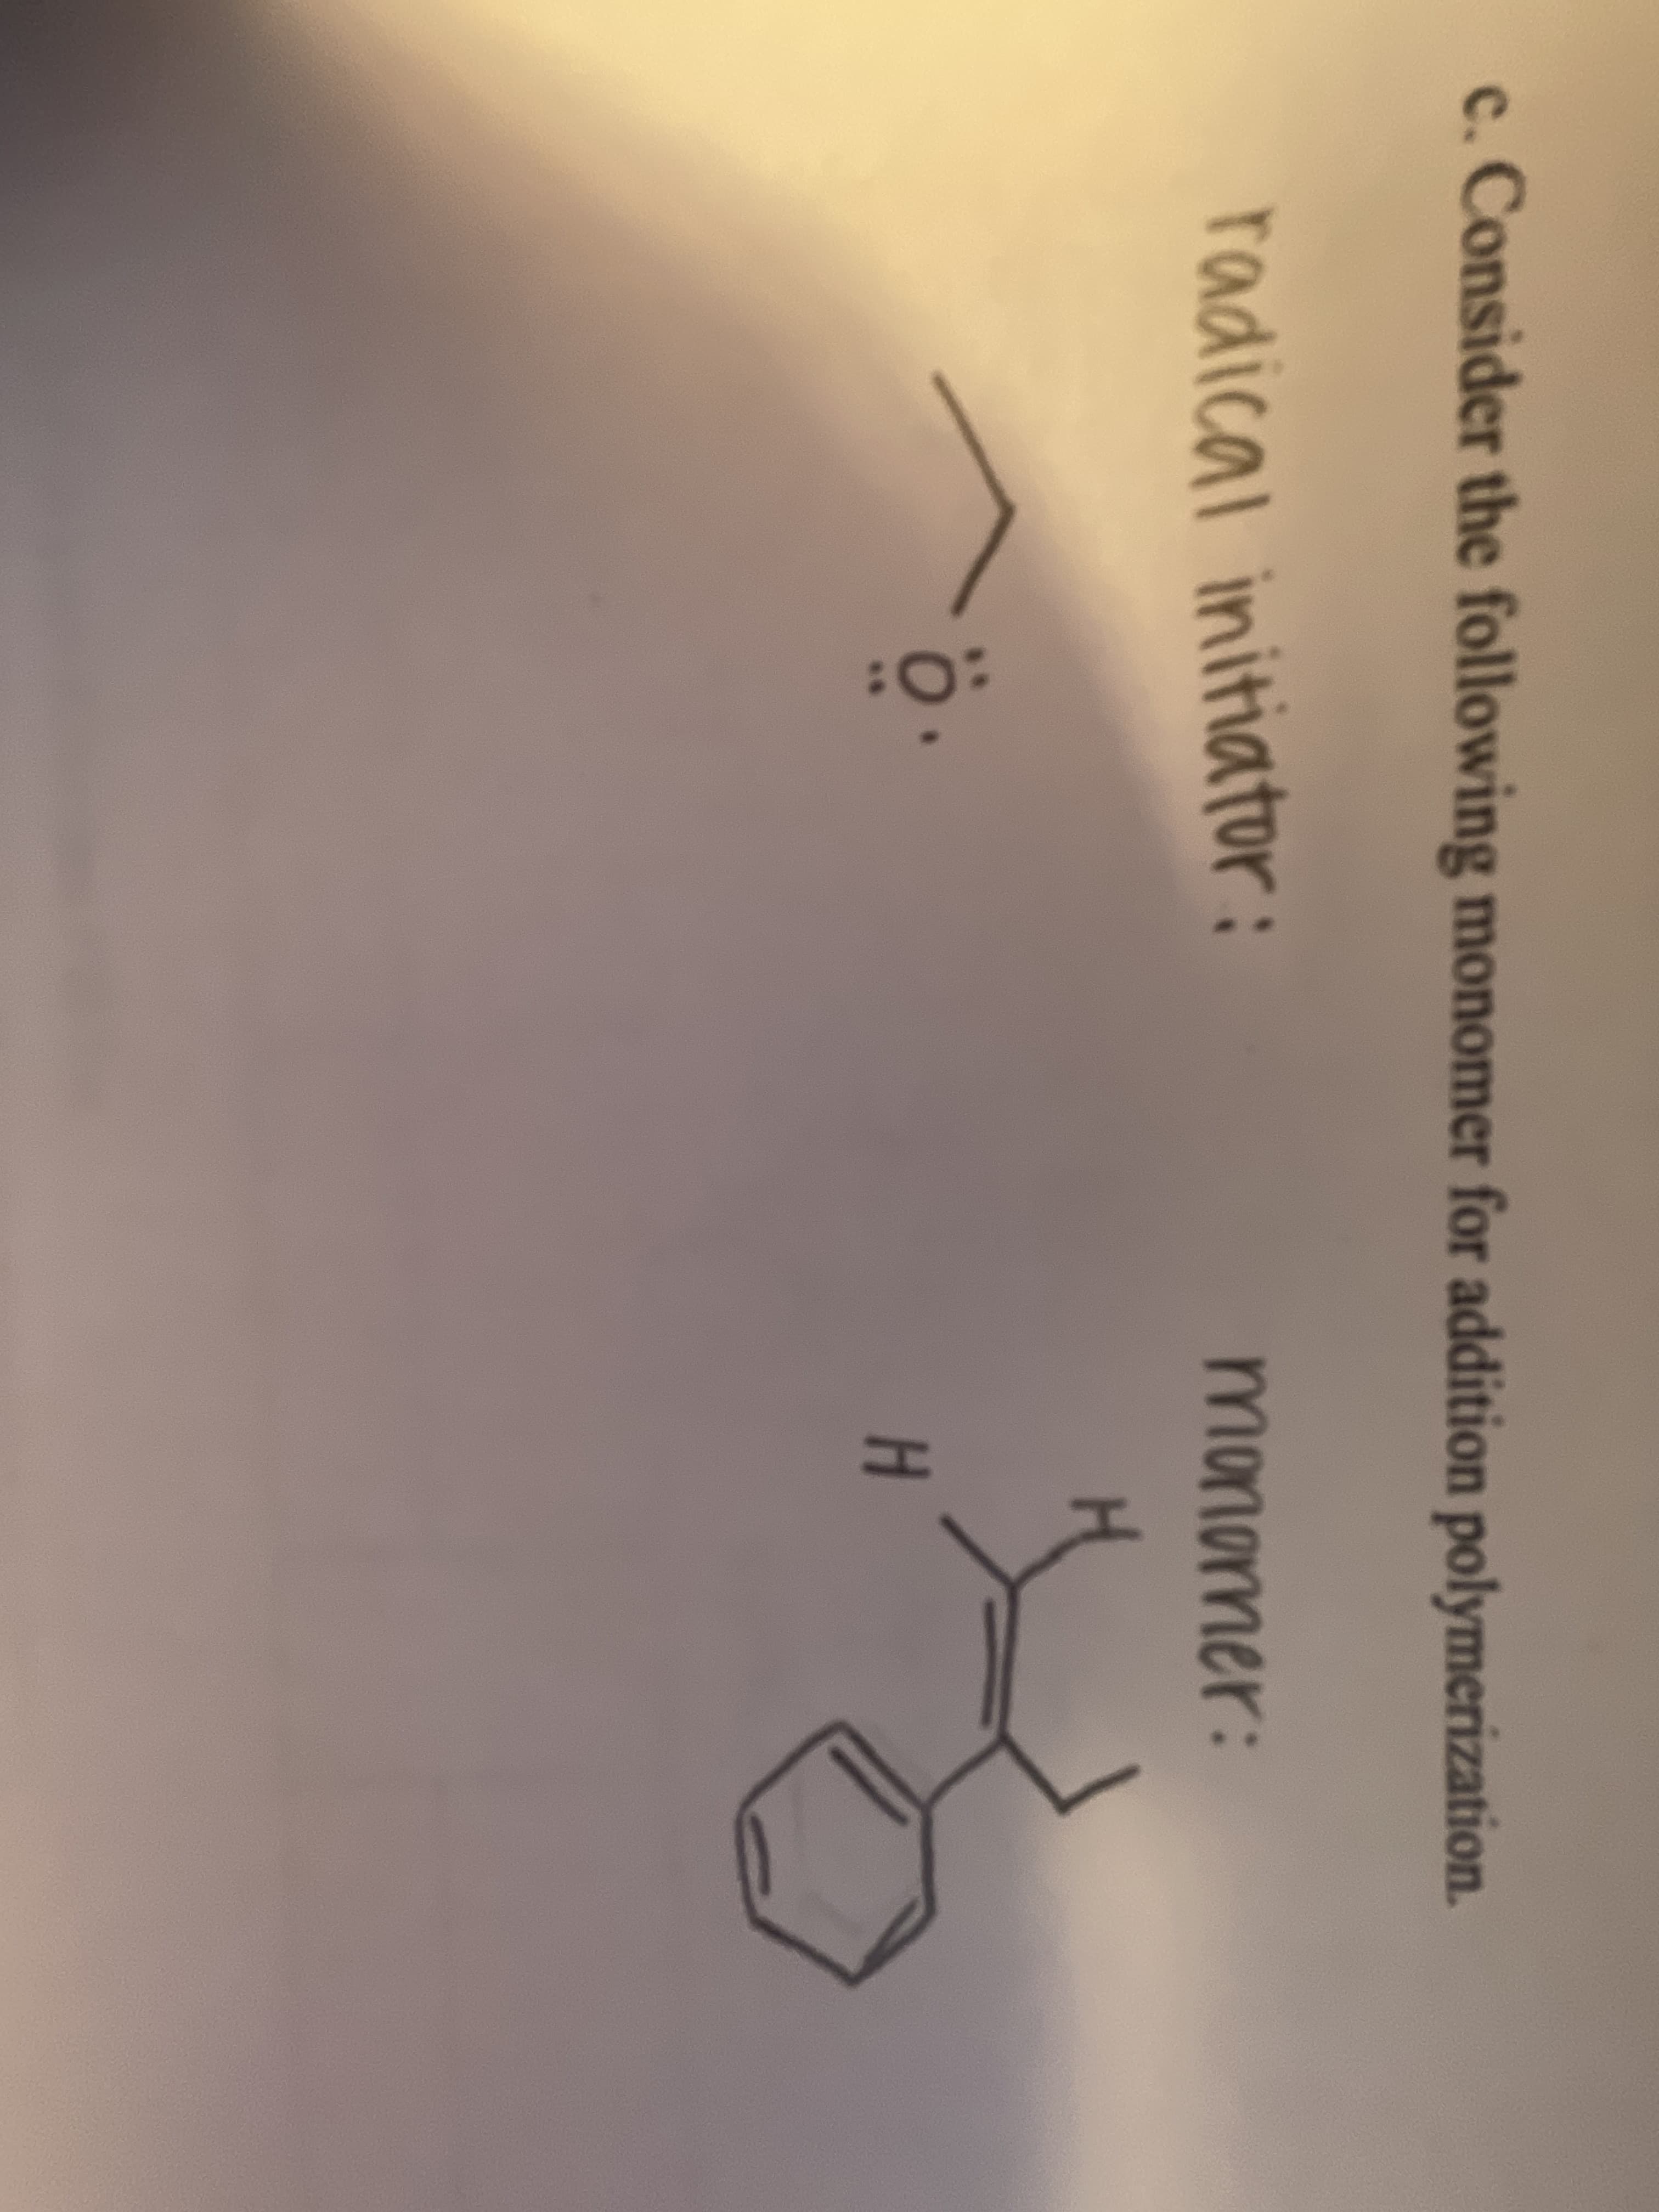 c. Consider the following monomer for addition polymerization.
radical initiator:
monomer:
